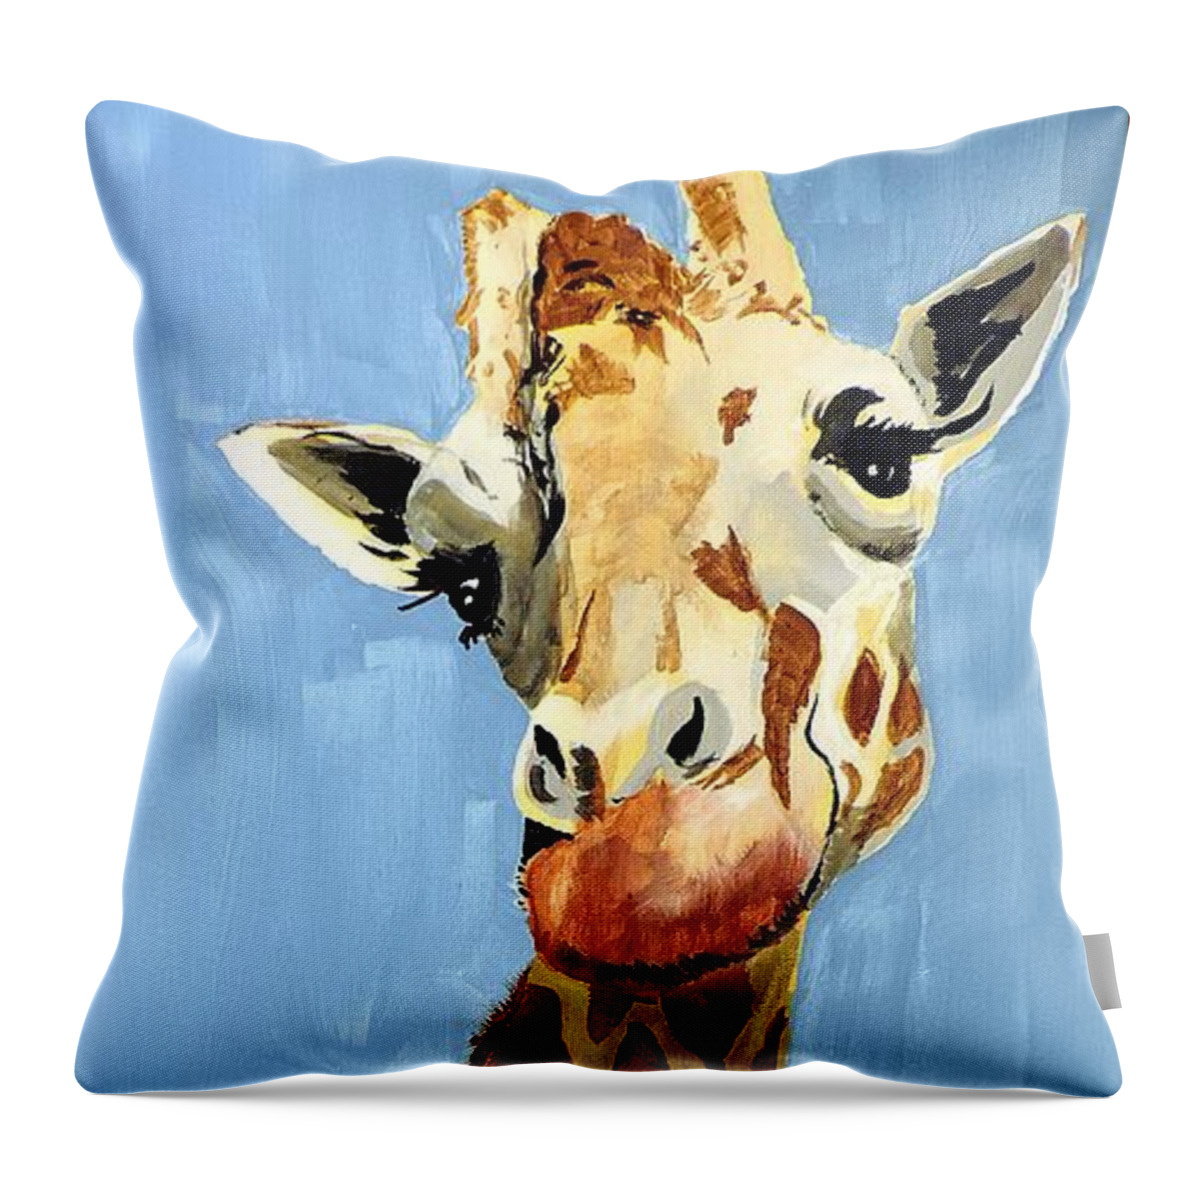 Giraffe Throw Pillow featuring the painting Girard Giraffe by Tom Riggs